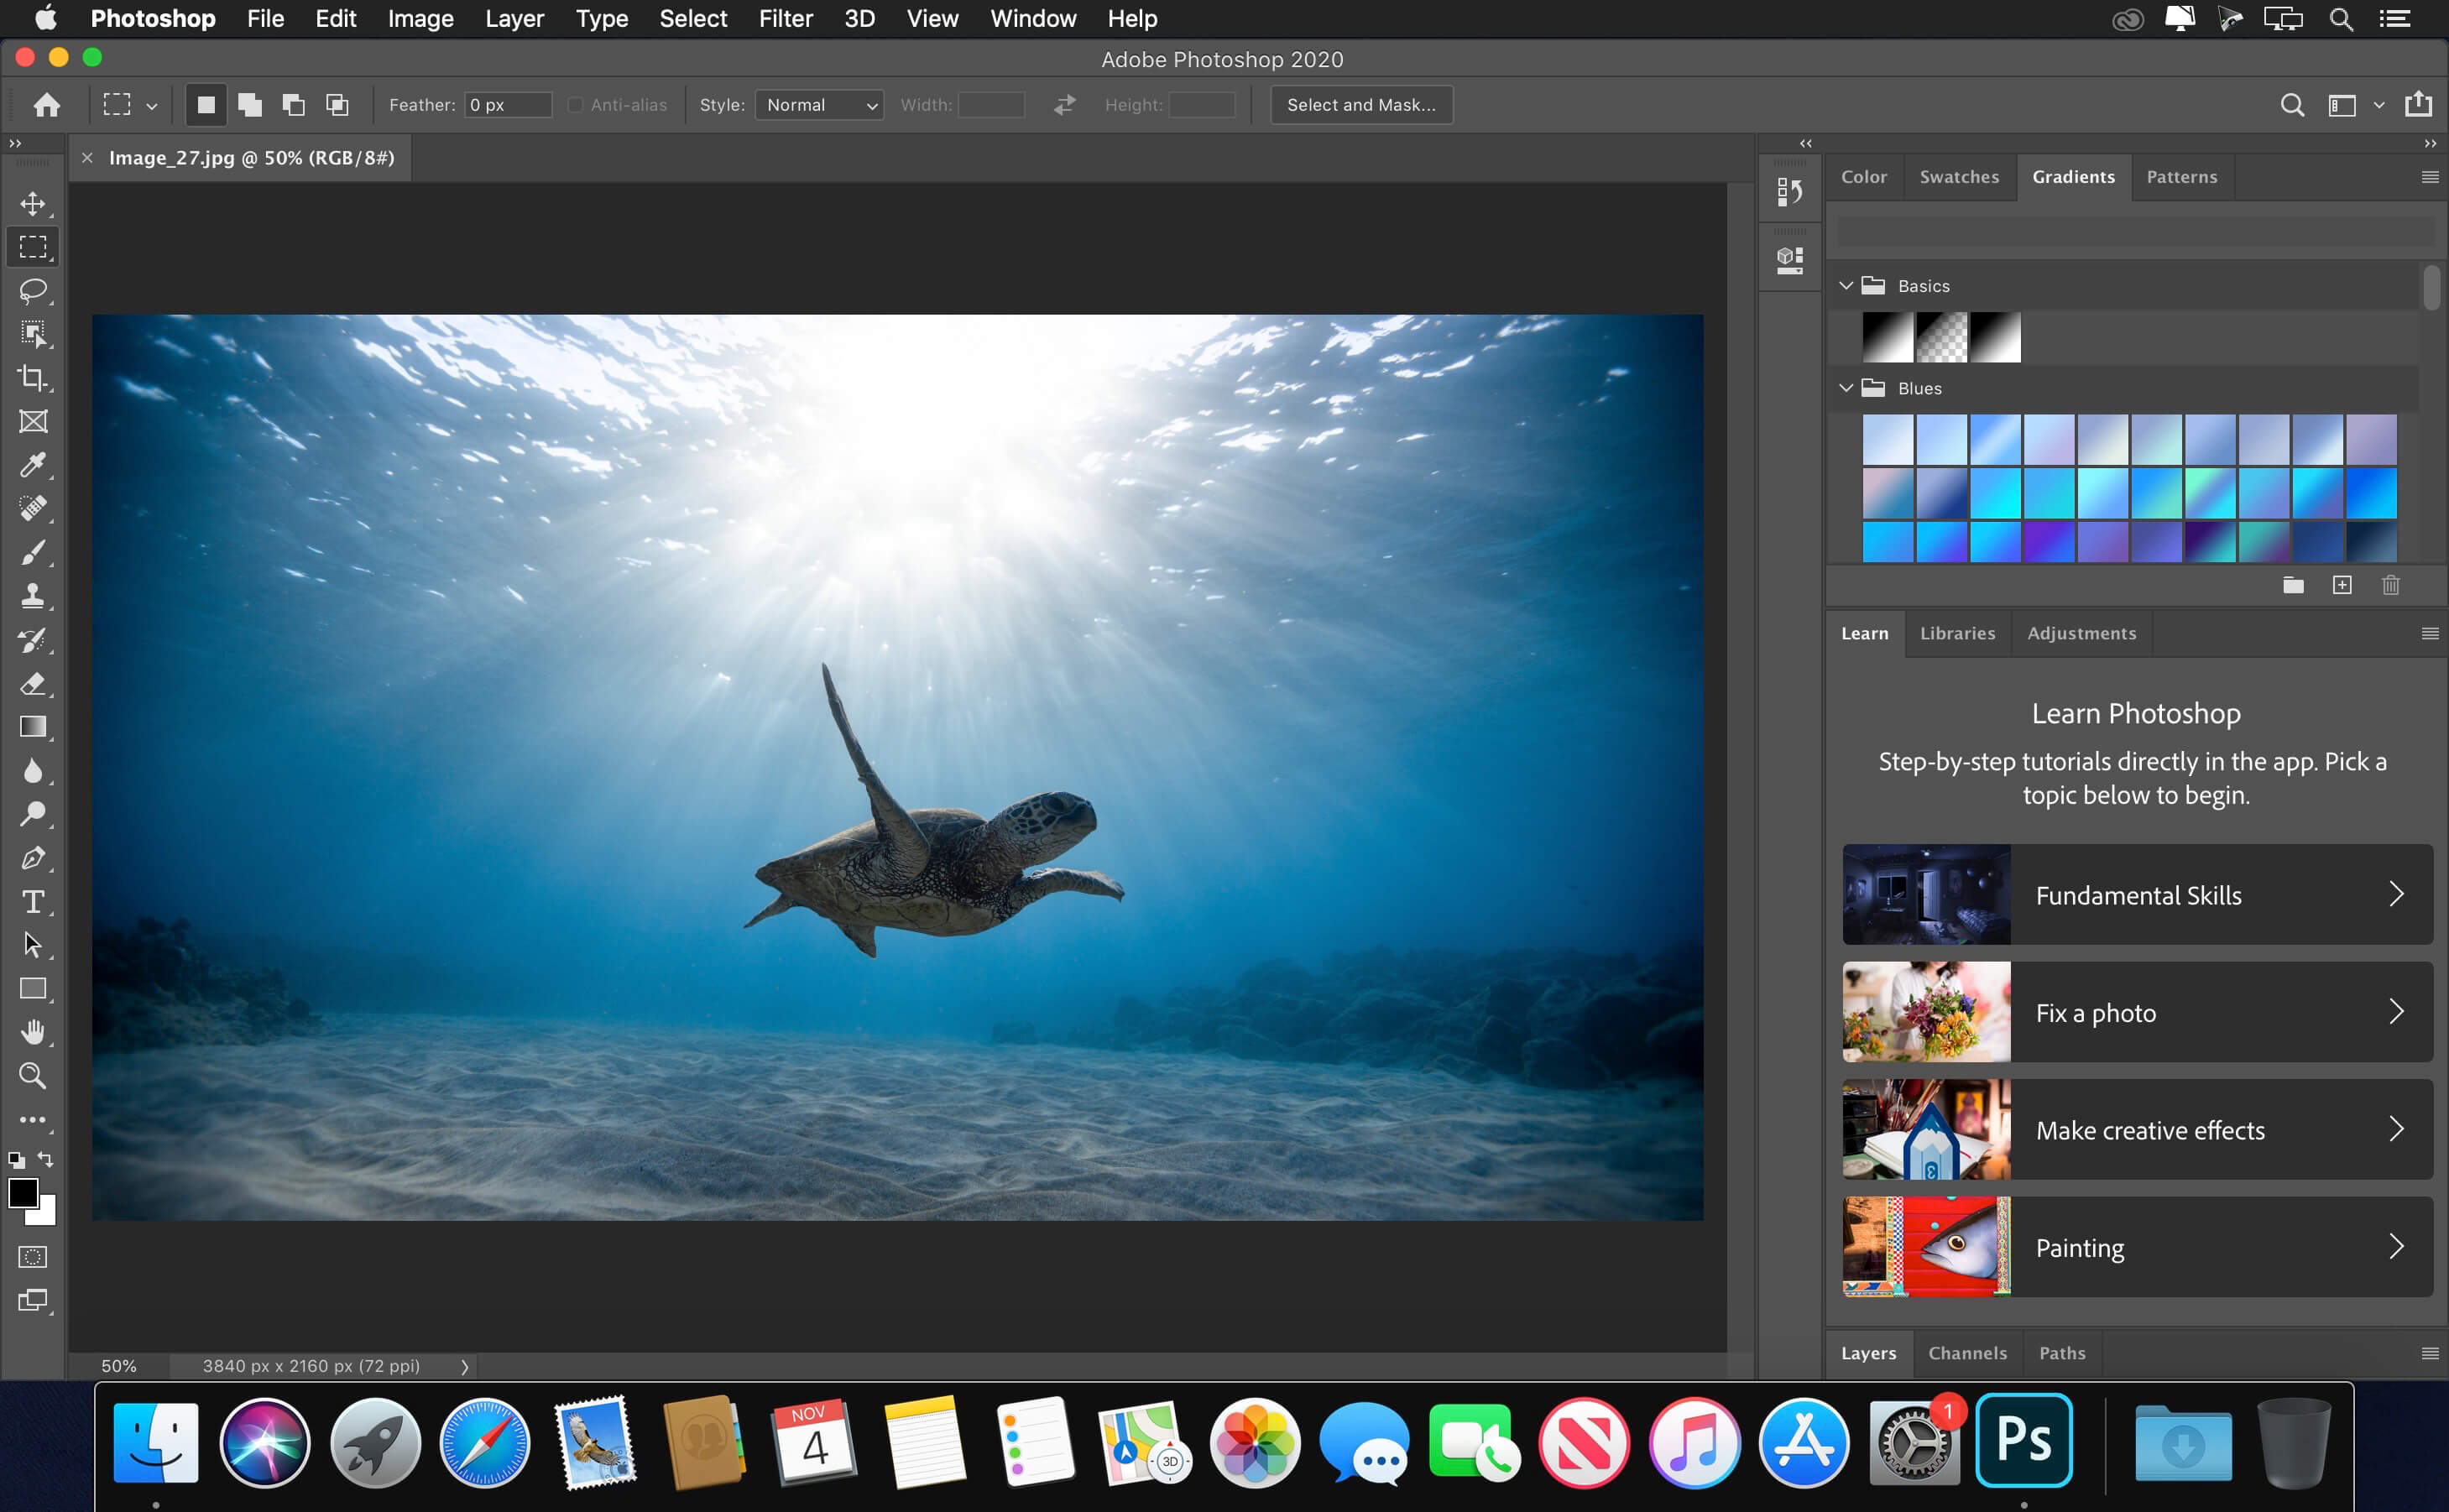 Adobe Photoshop 2021 22.5 for Mac|Mac版下载 | PS图形设计软件